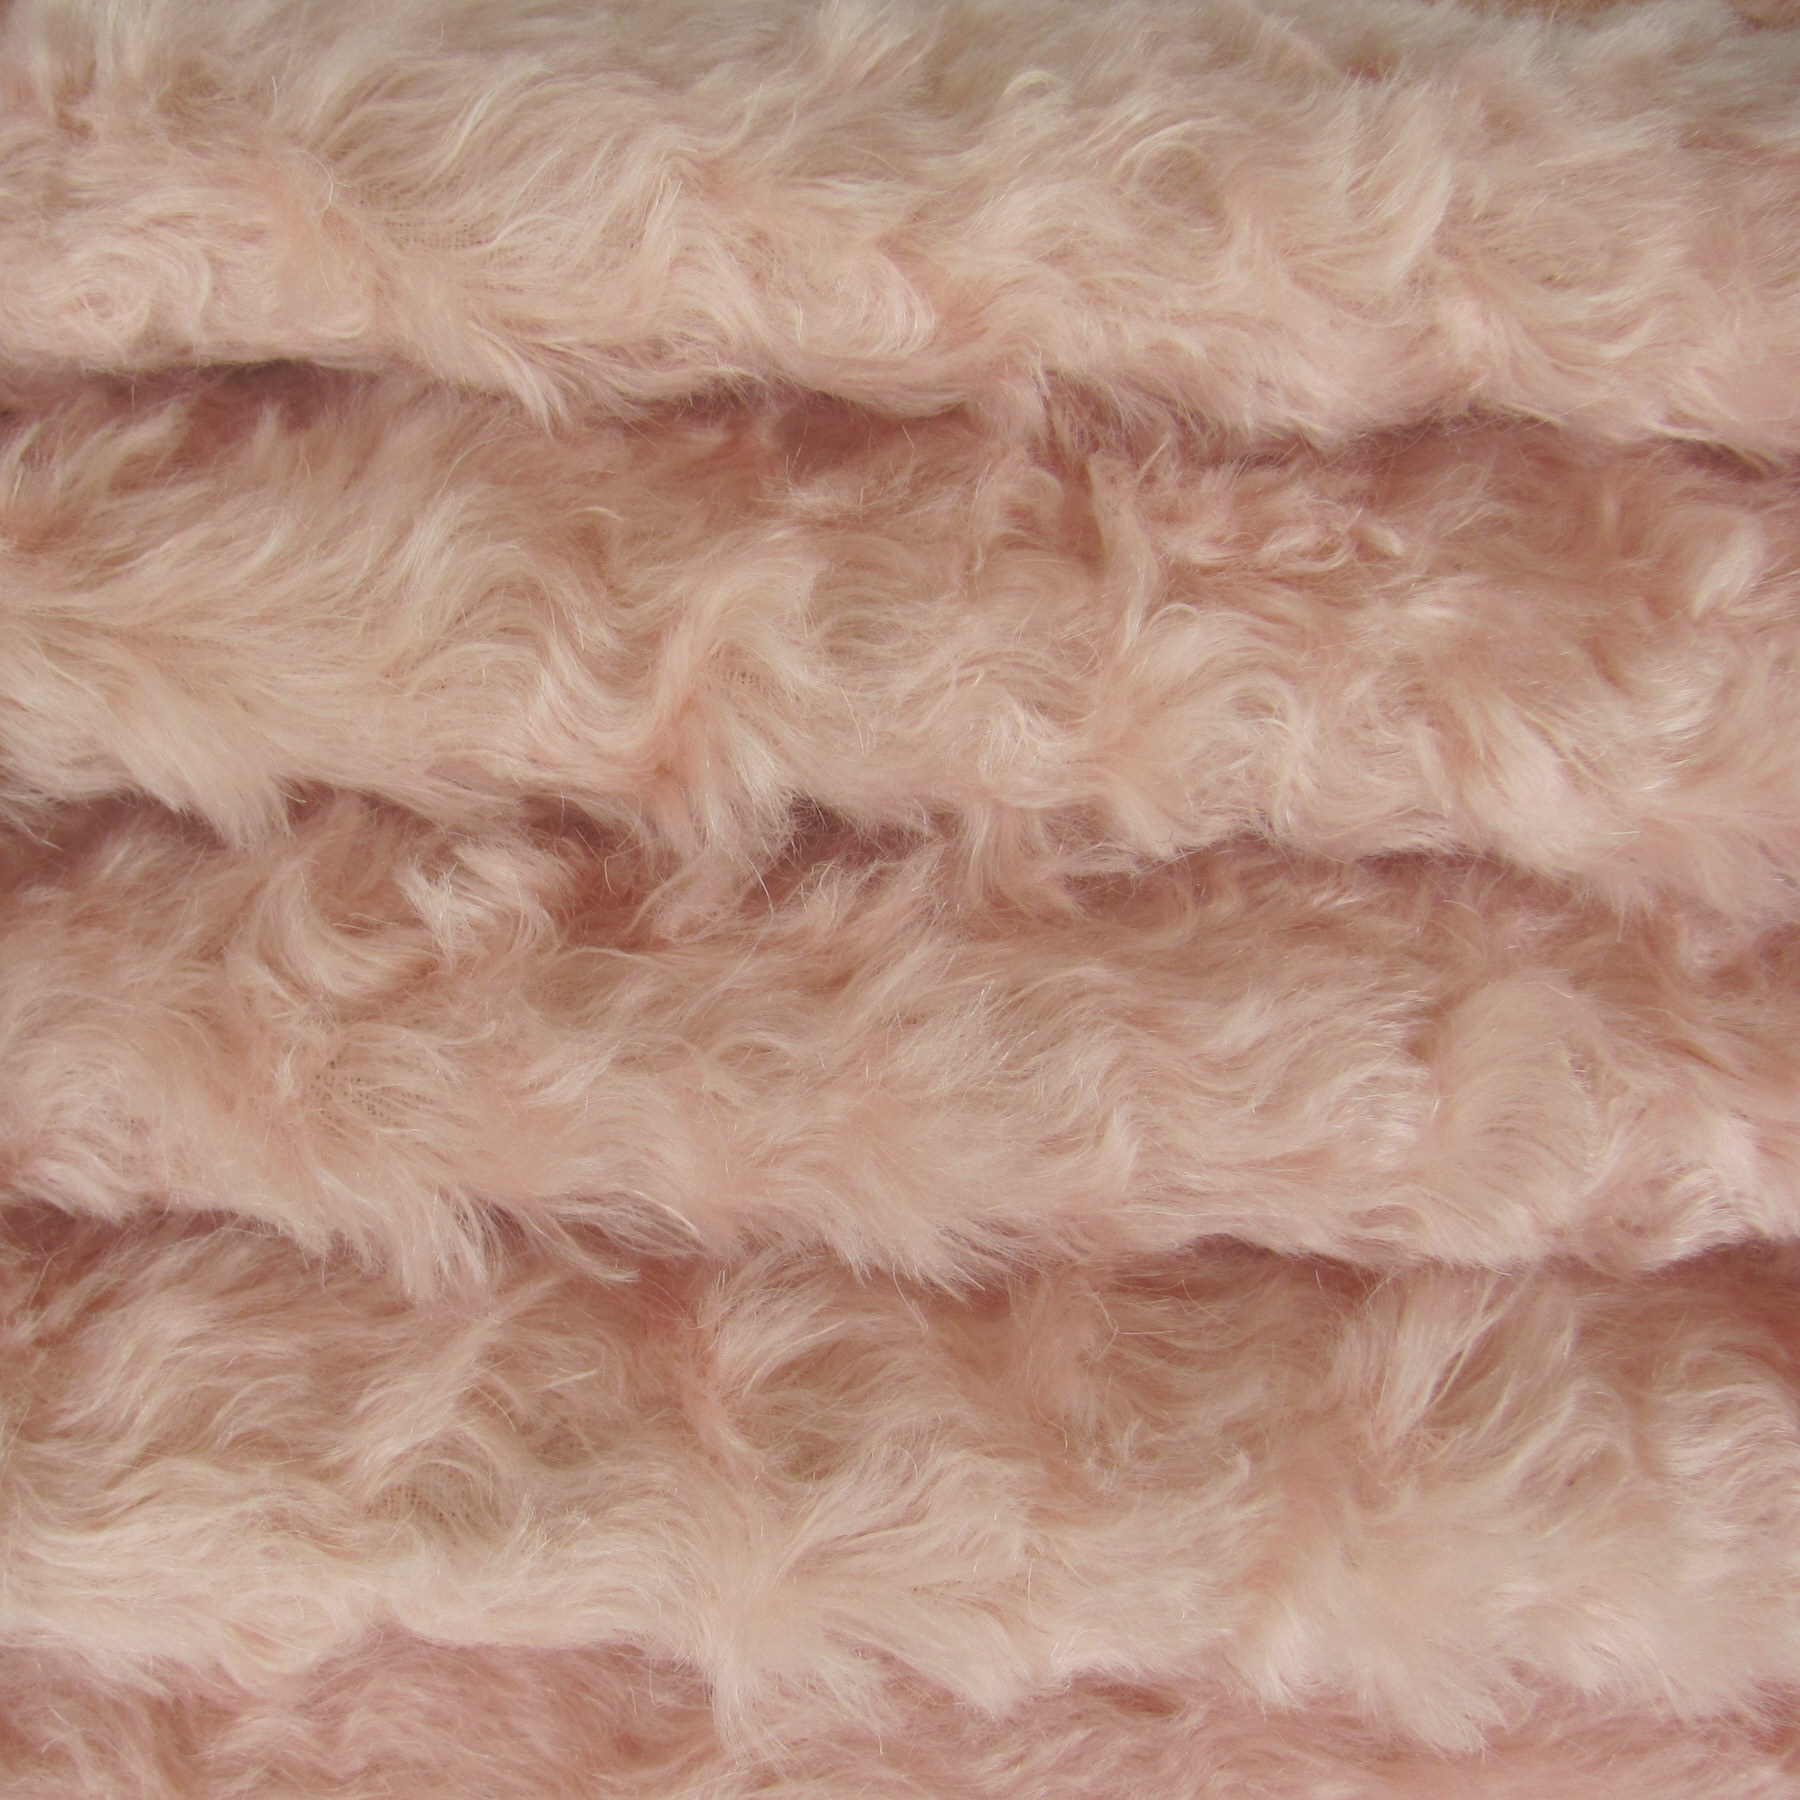 Mohair, Animal Fibre, Textile Yarn & Clothing Fabric